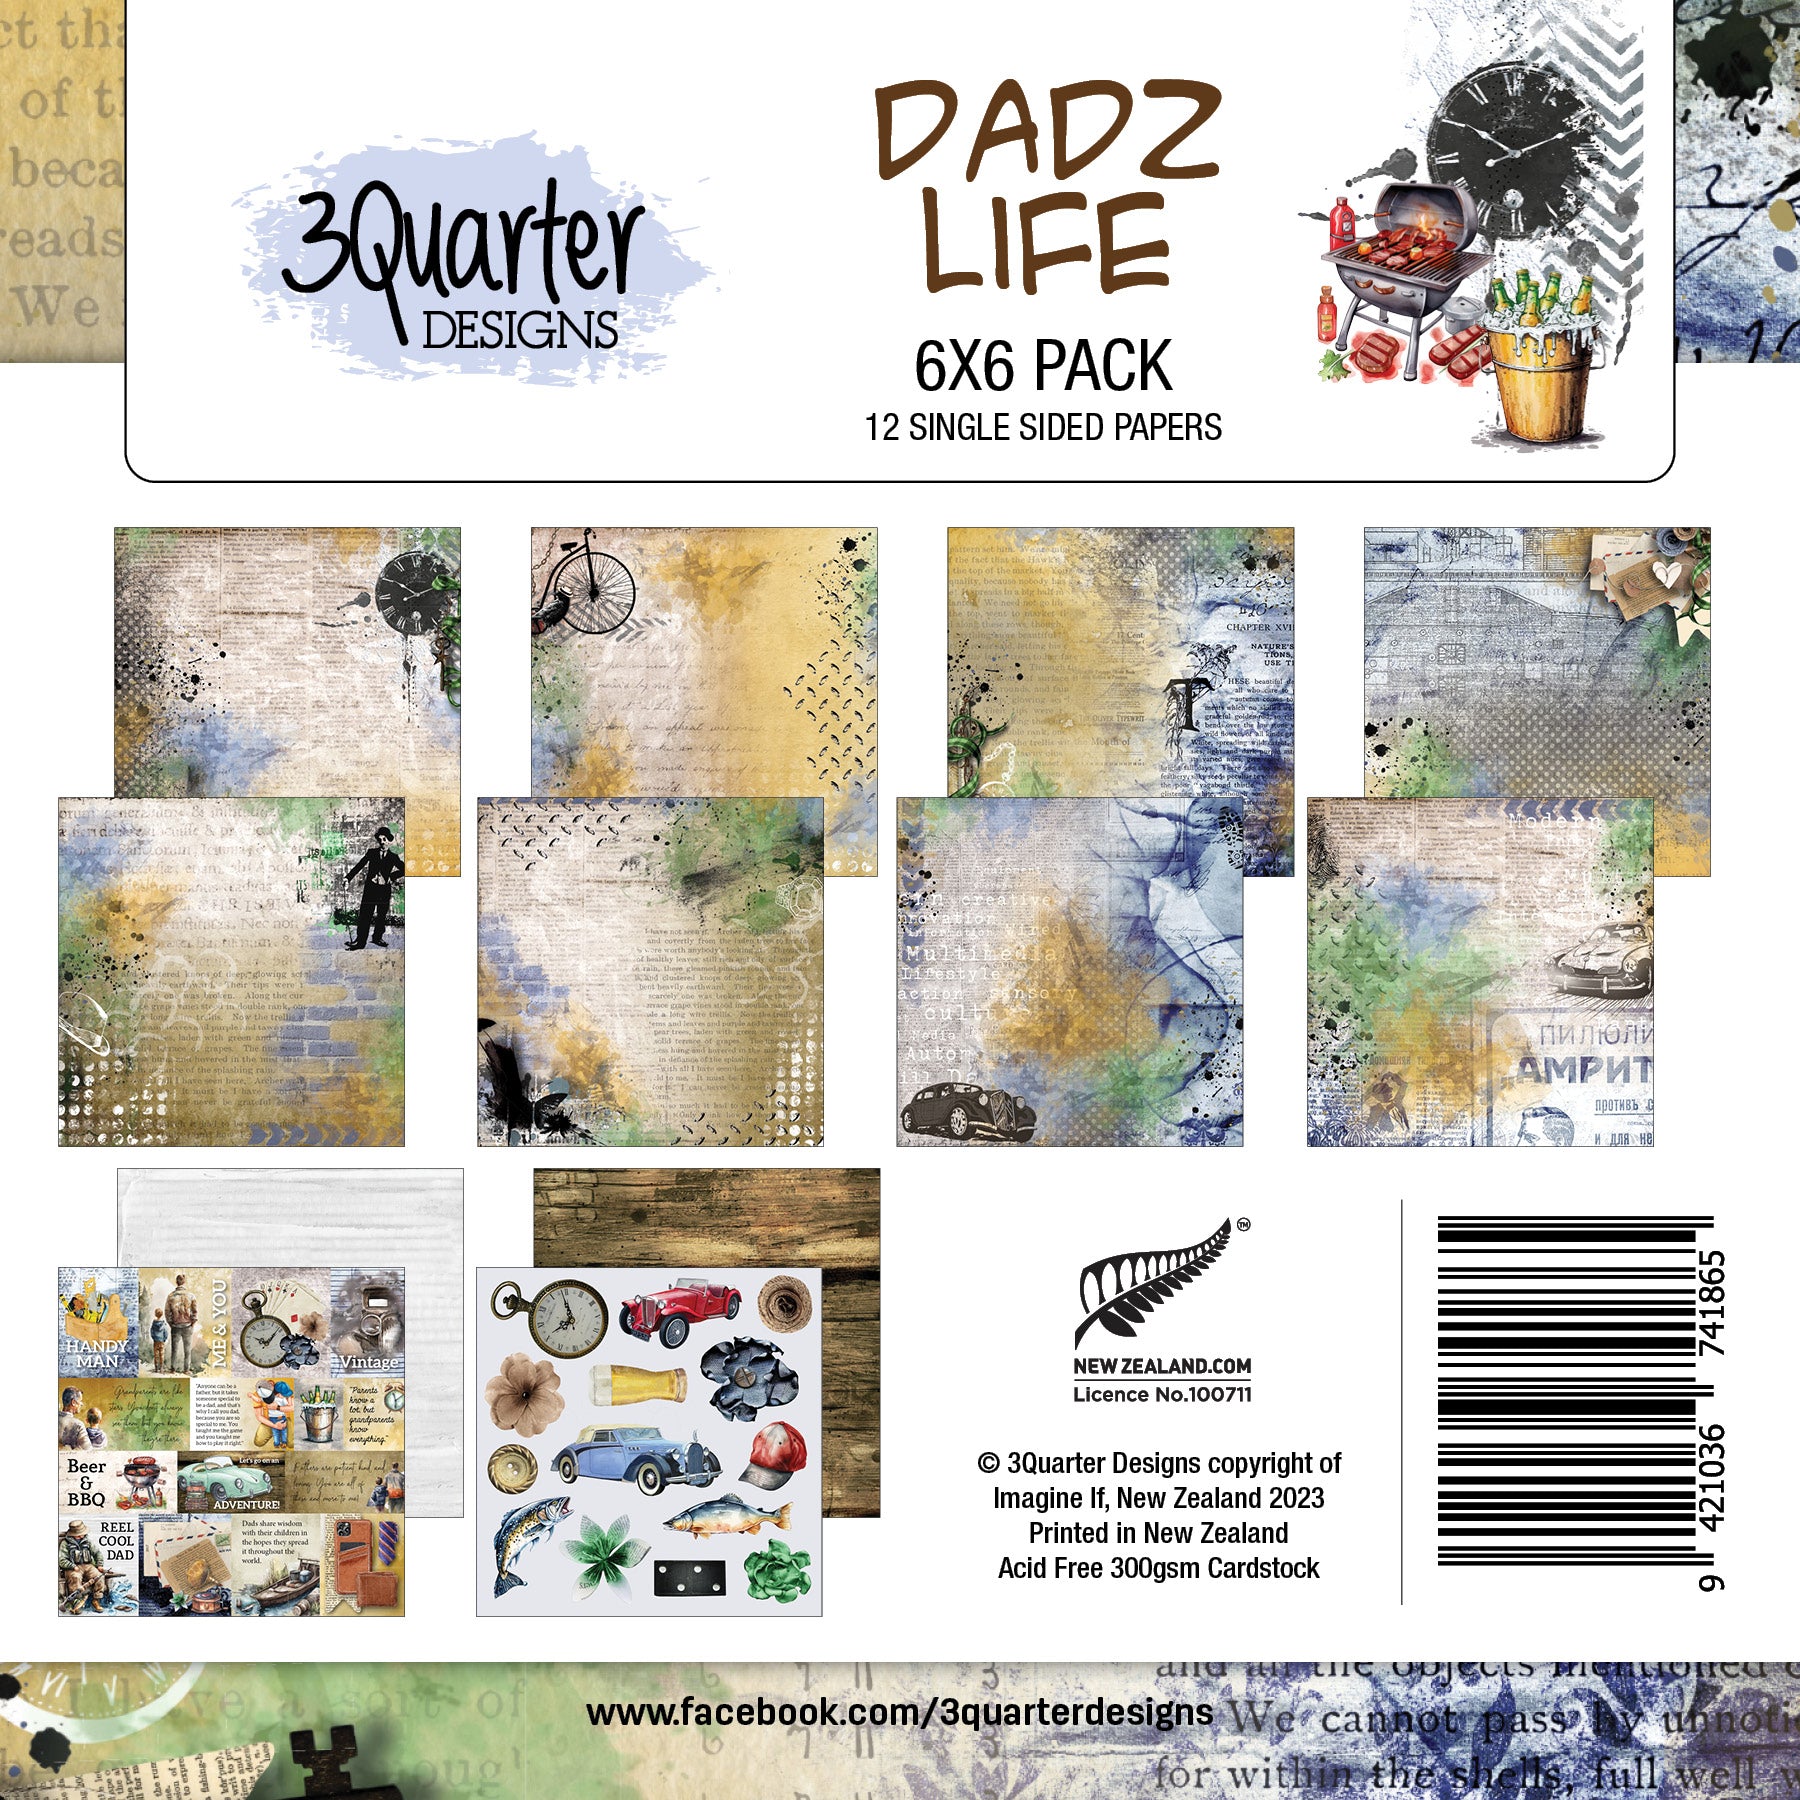 Dadz Life 6x6 Pack